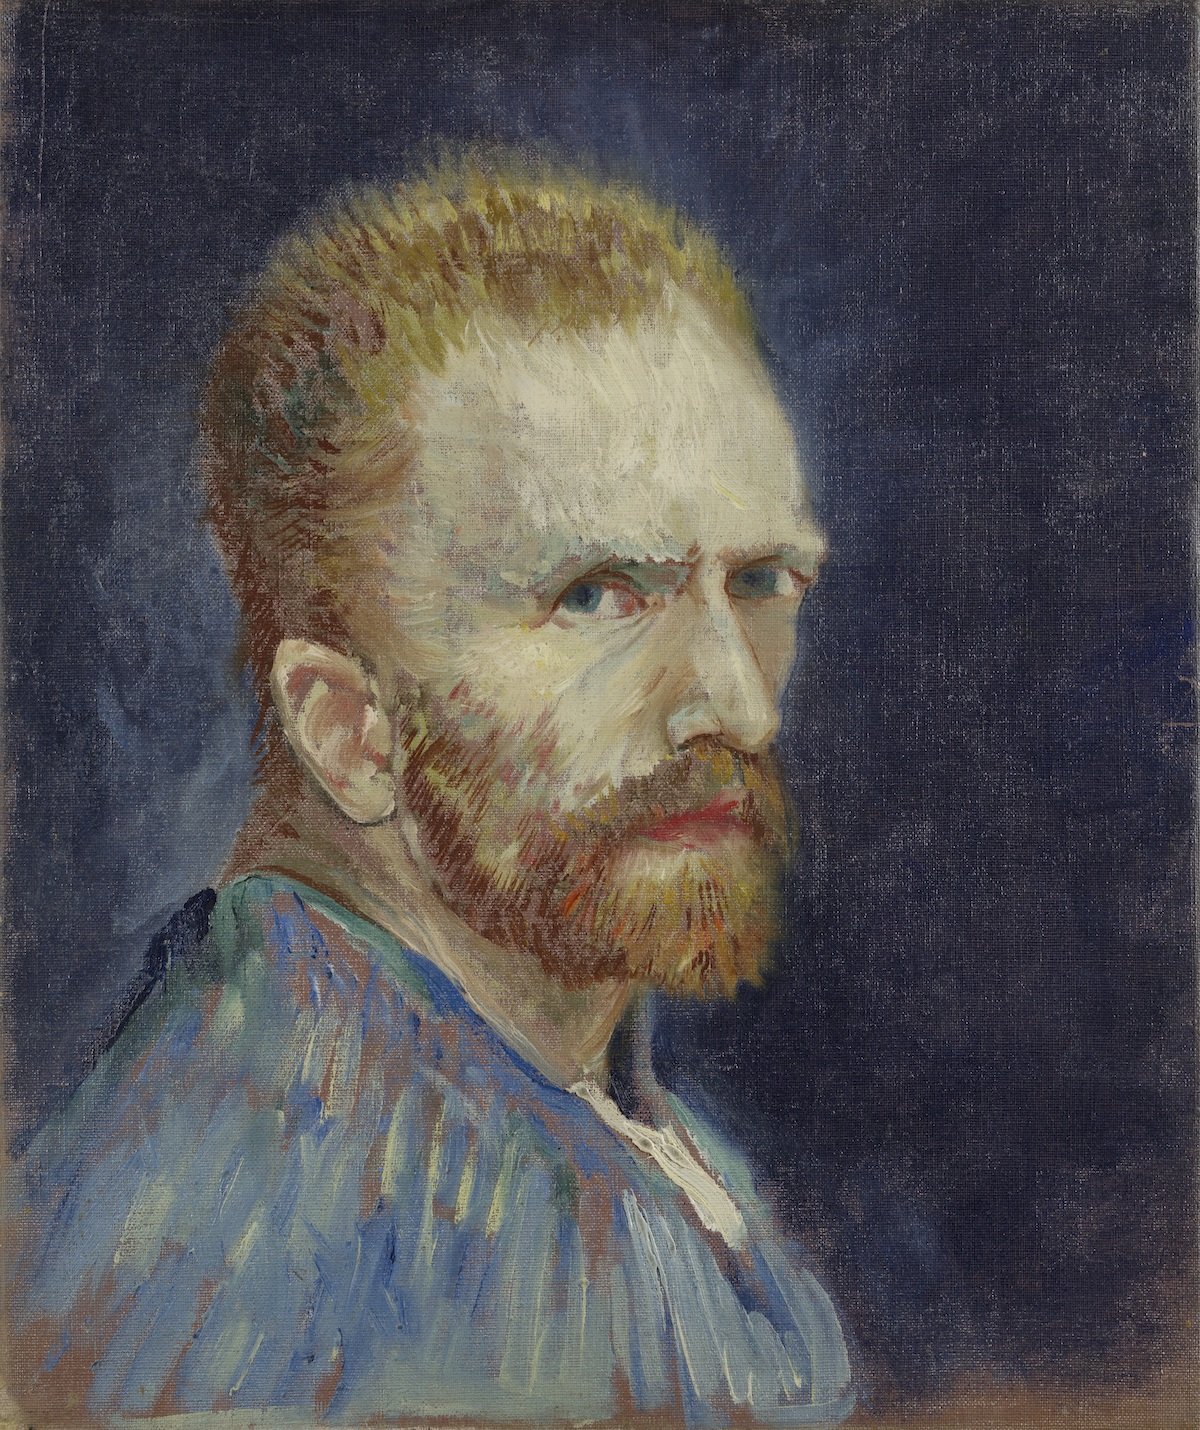 The Wick - Vincent van Gogh,
Self-Portrait, c. 1887 
Wadsworth Atheneum Museum of Art